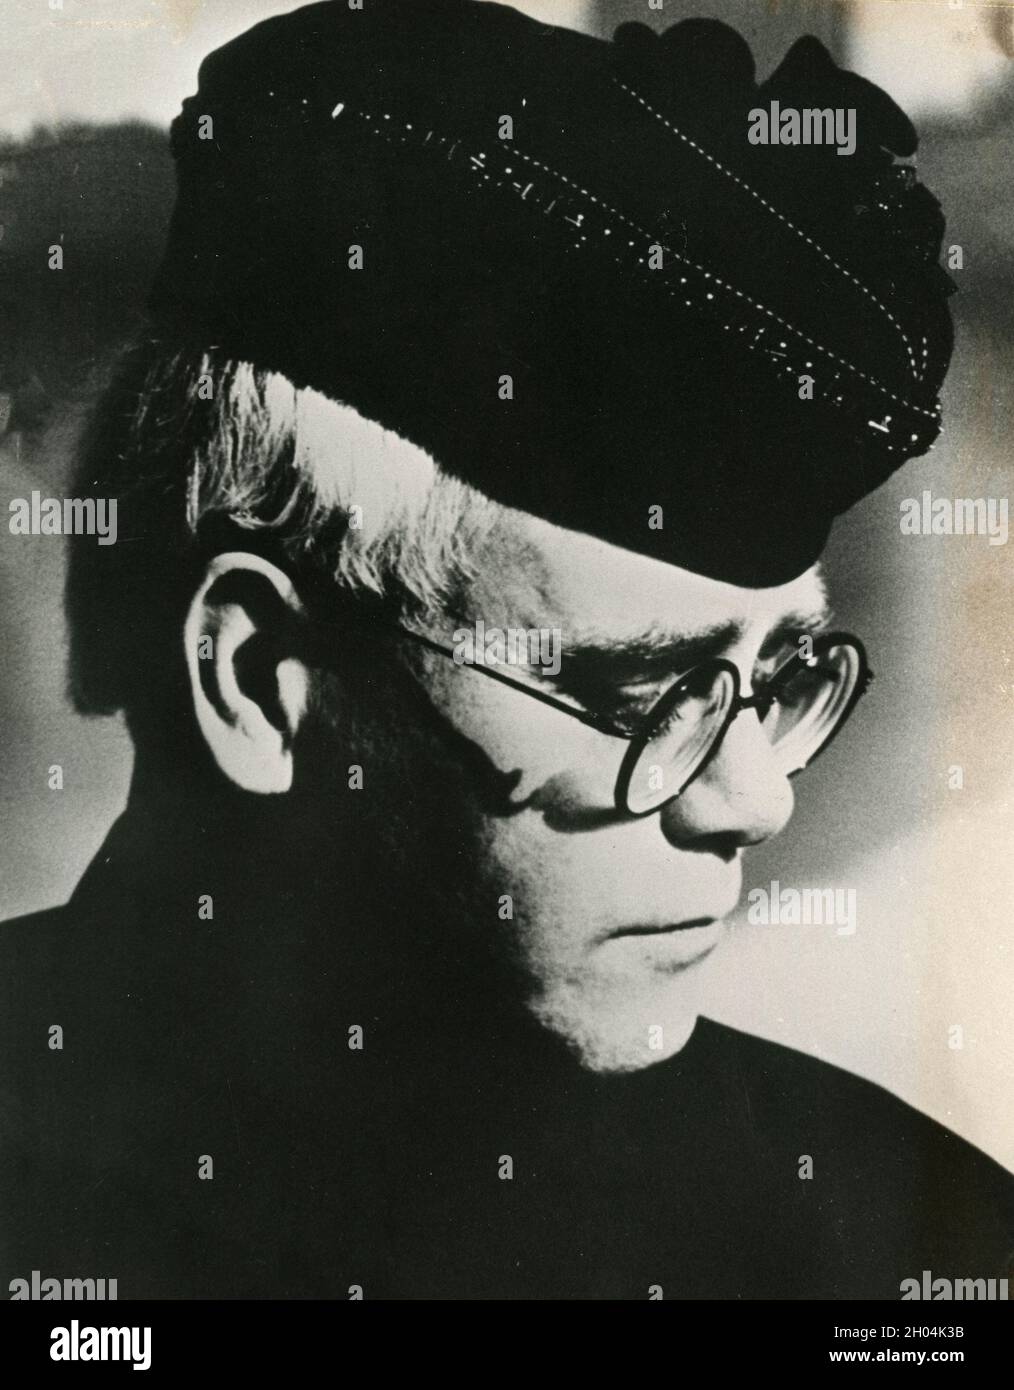 English singer and songwriter Elton John, 1980s Stock Photo